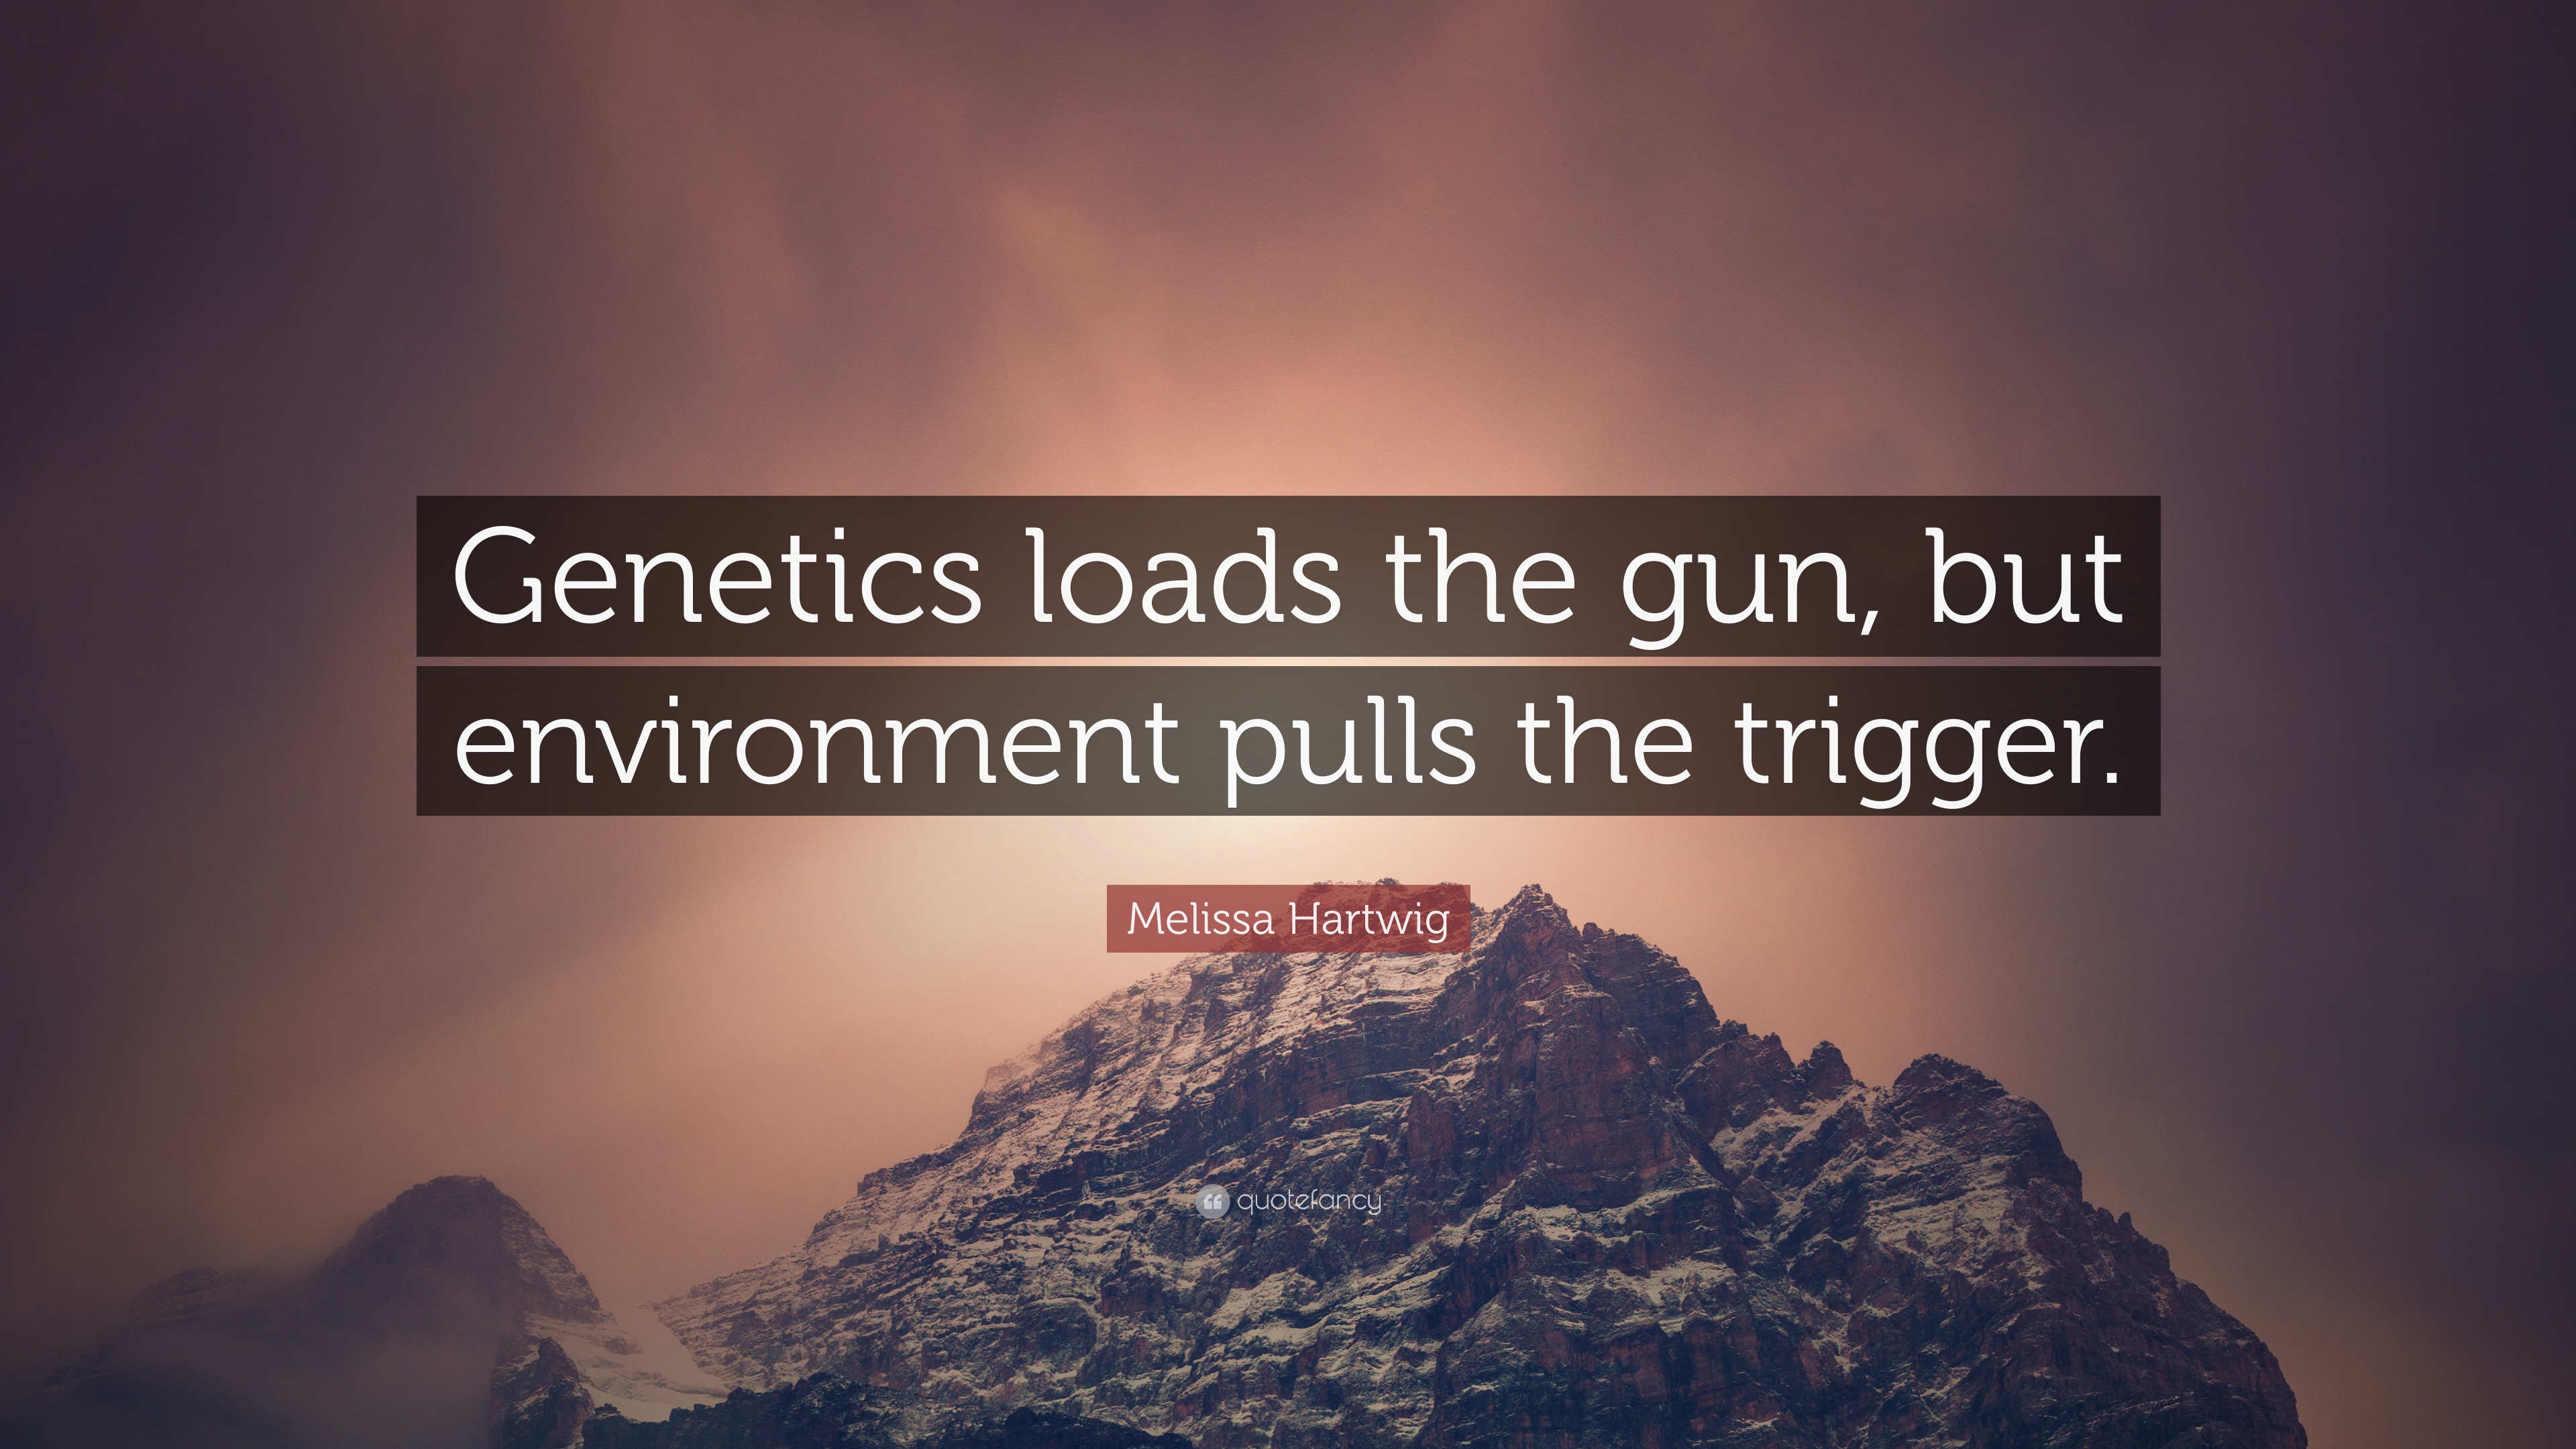 Melissa Hartwig Quote: “Genetics loads the gun, but environment pulls